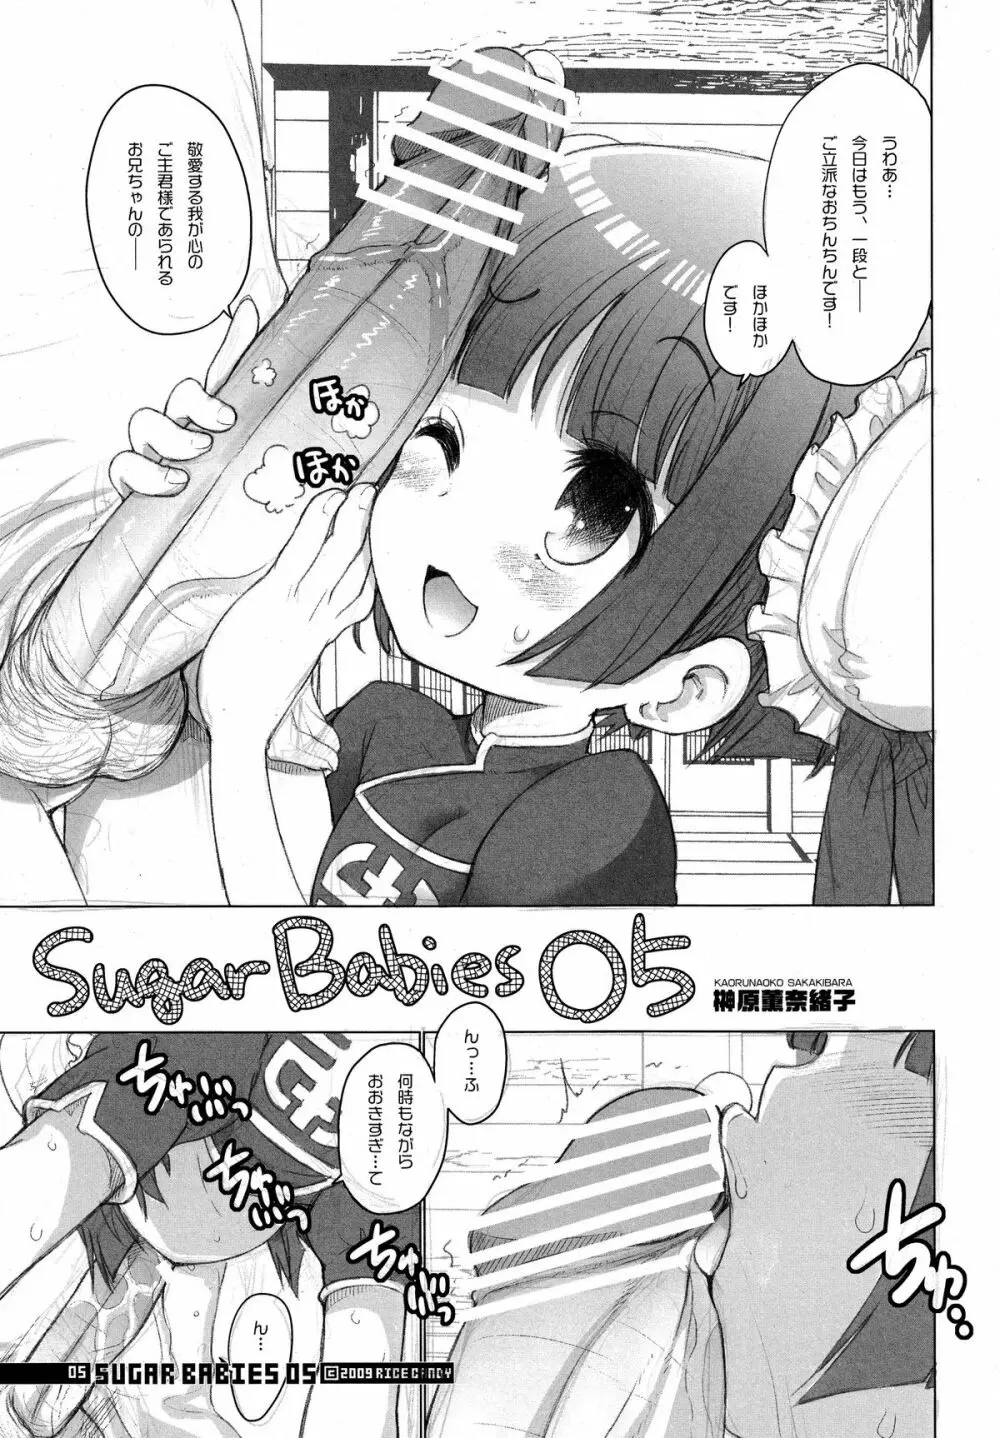 Sugar Babies 05 Page.4